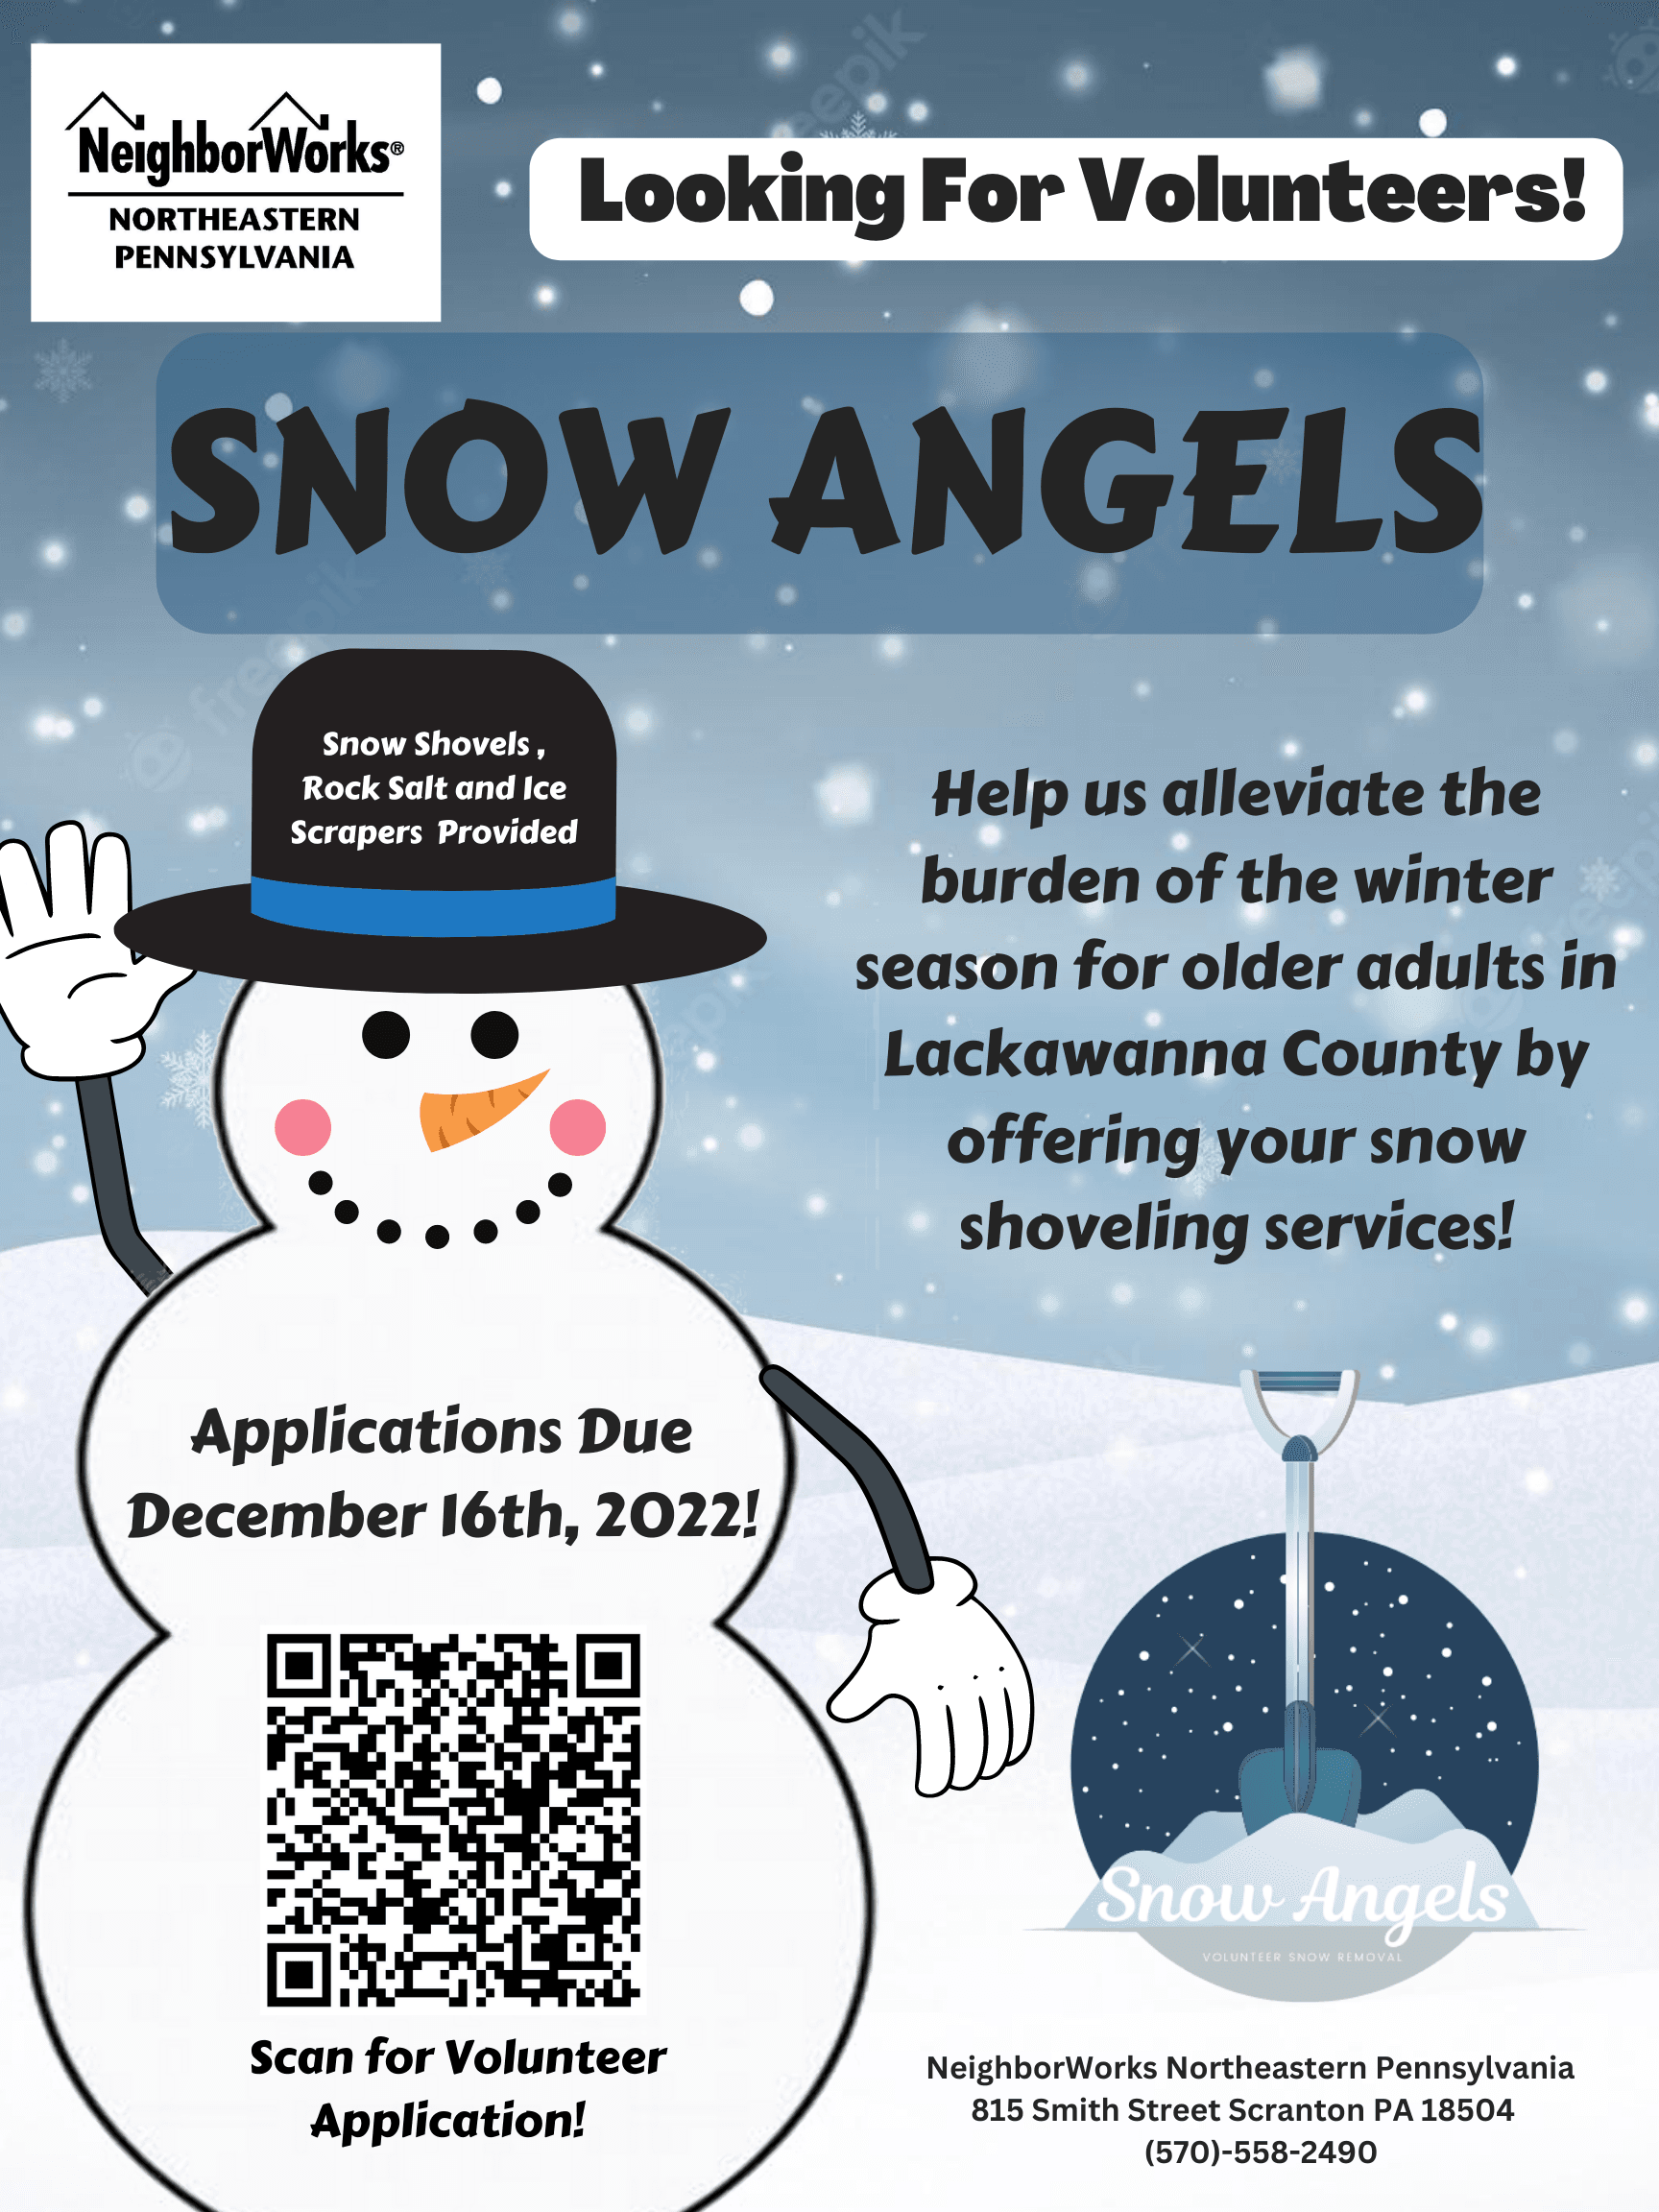 "Snow Angels" Seeking Participants